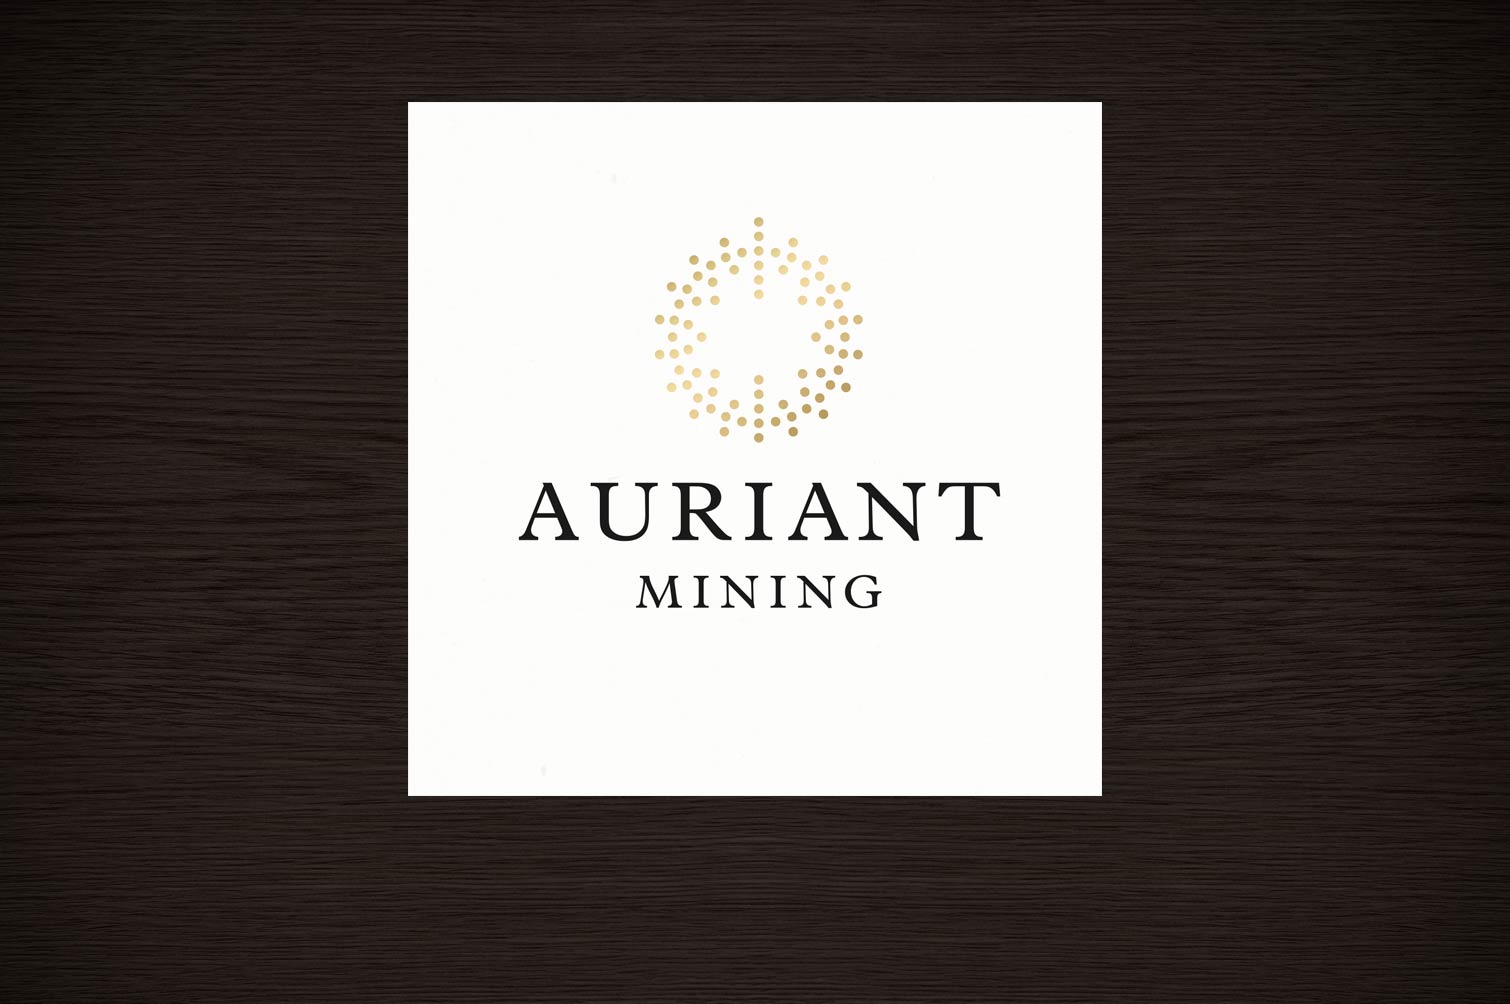 Auriant Mining corporate identity